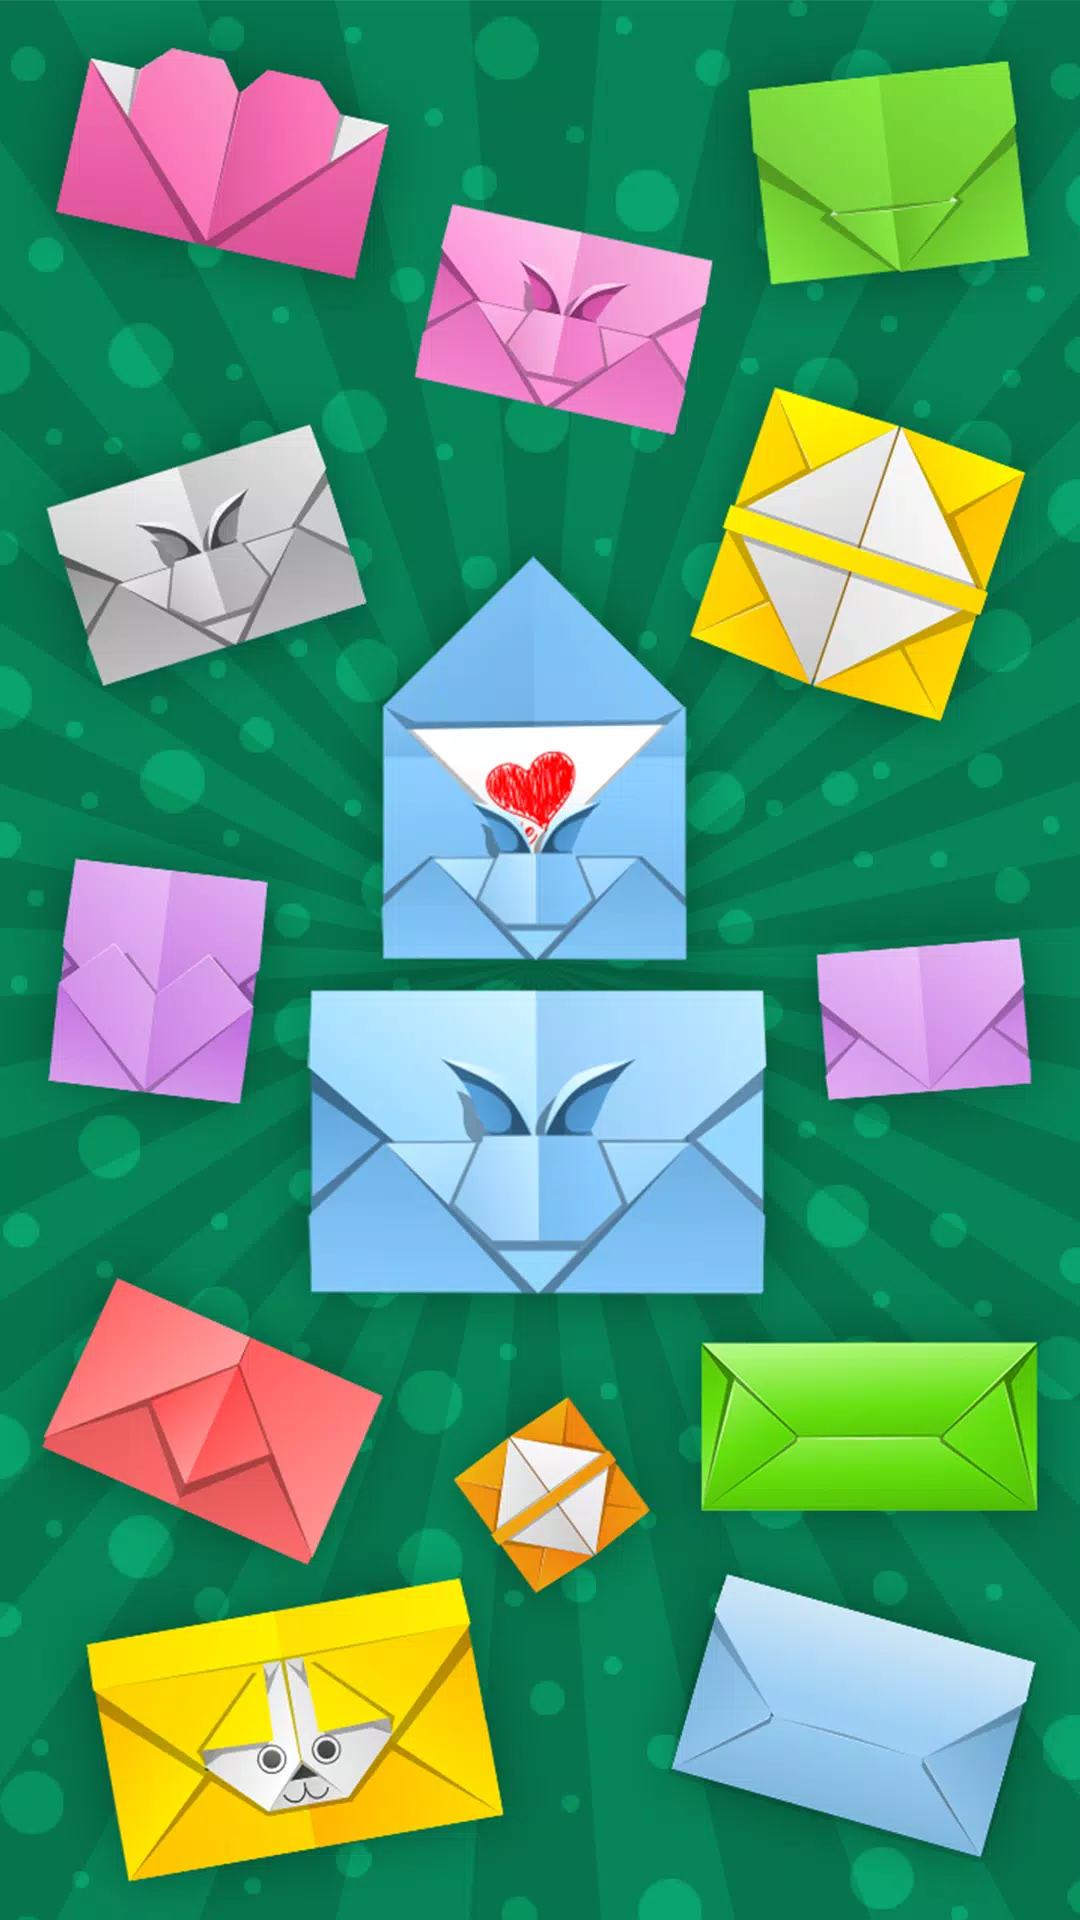 Descarga de APK de Sobres de origami para Android